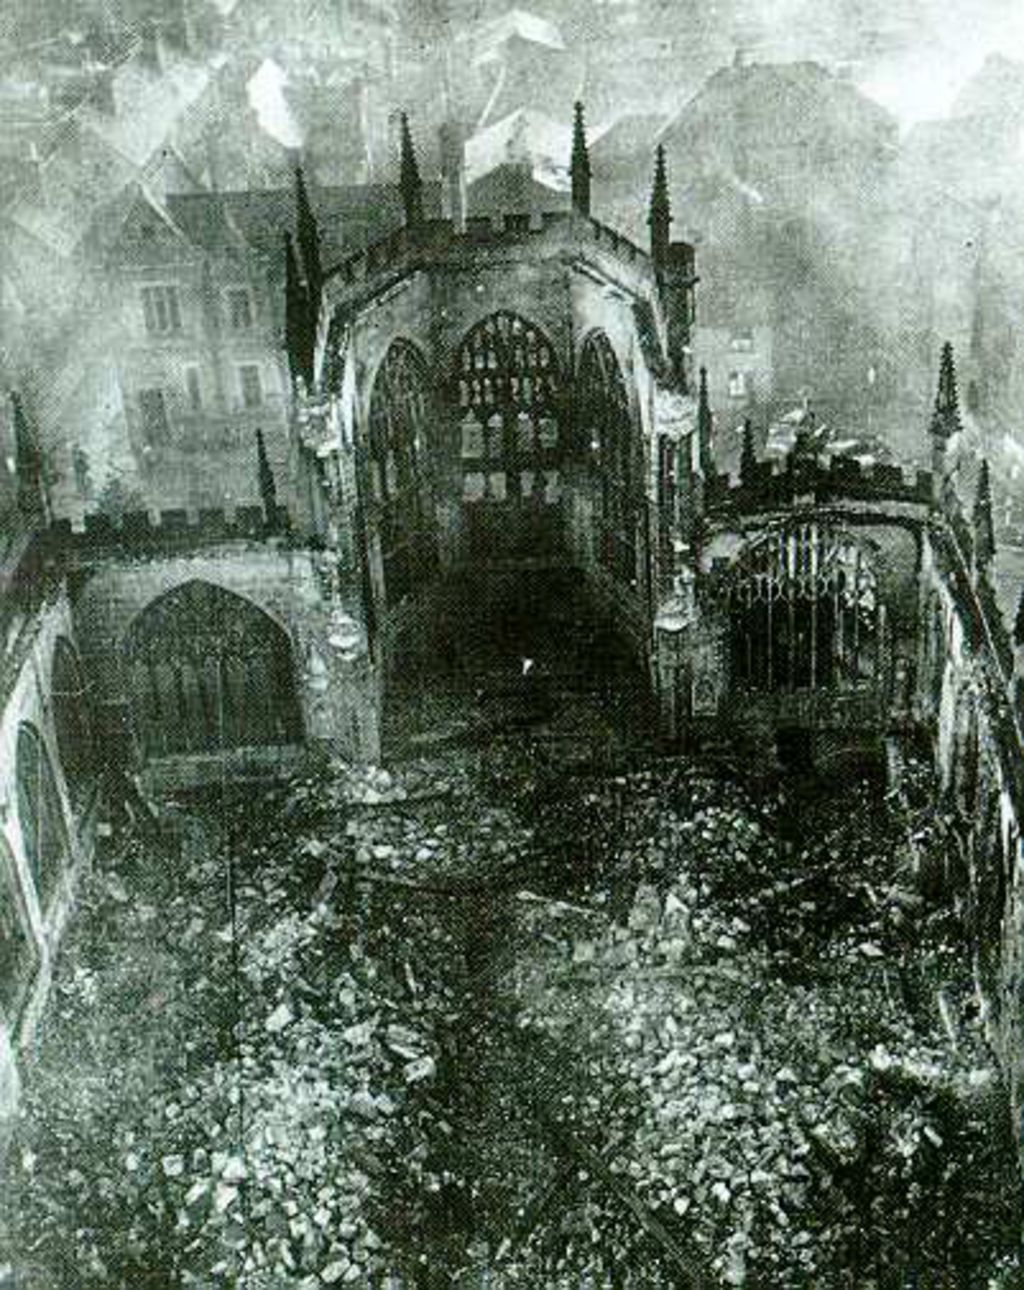 Exponat: Foto: Coventry - Zerstörte Kathedrale, 1940, 1940